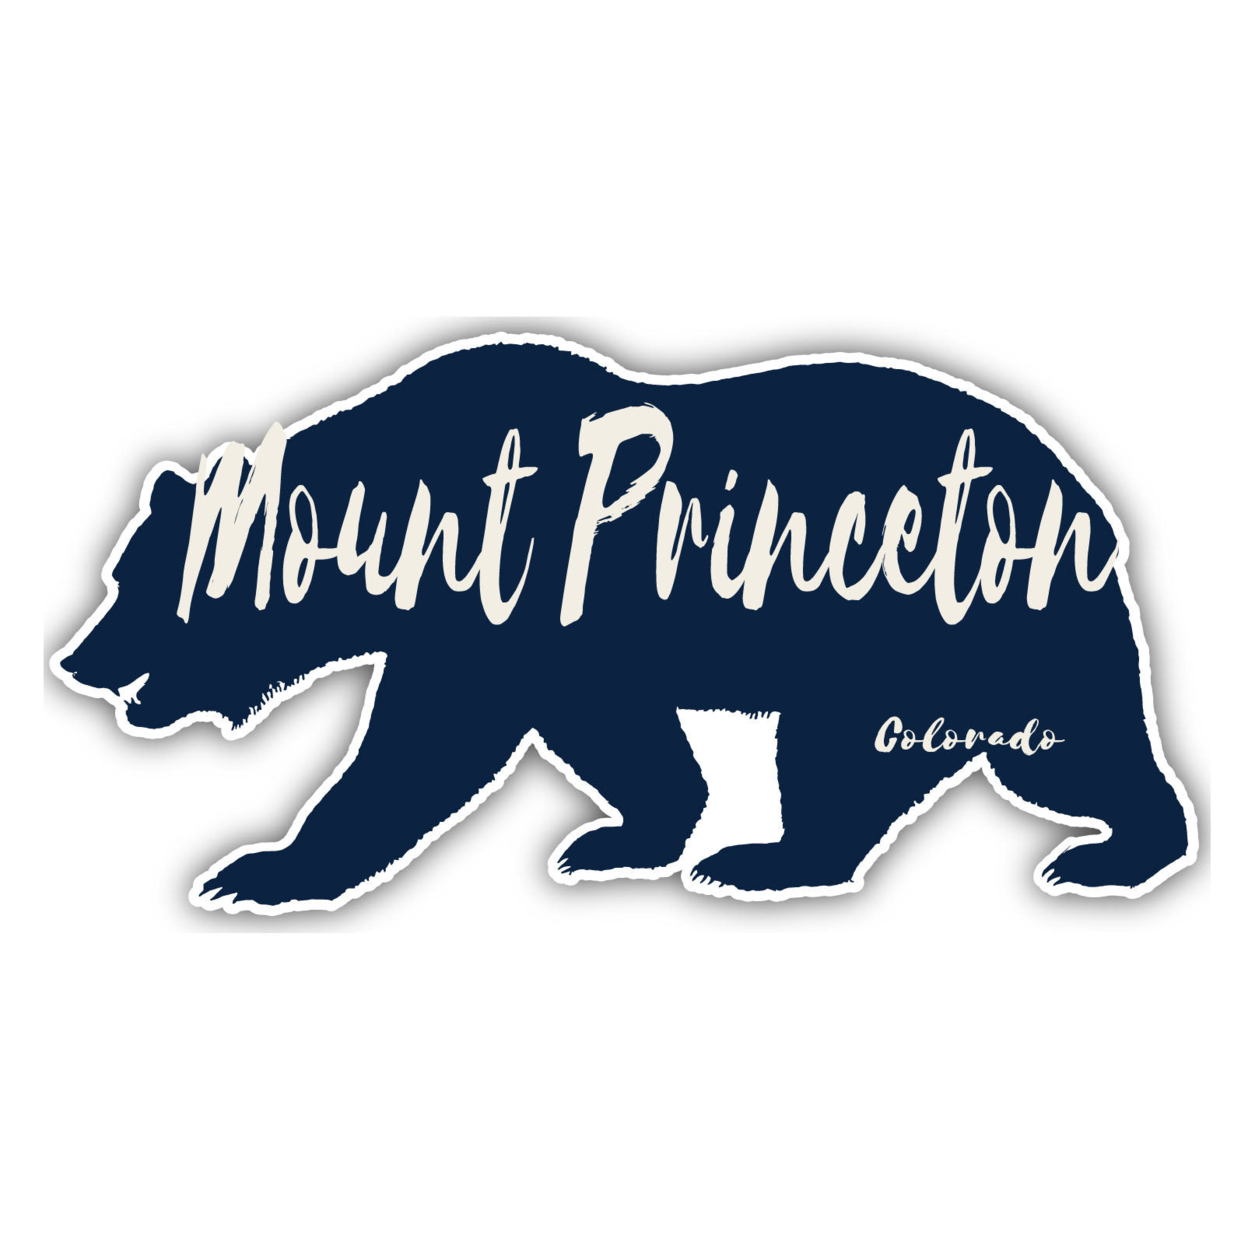 Mount Princeton Colorado Souvenir Decorative Stickers (Choose Theme And Size) - Single Unit, 4-Inch, Tent